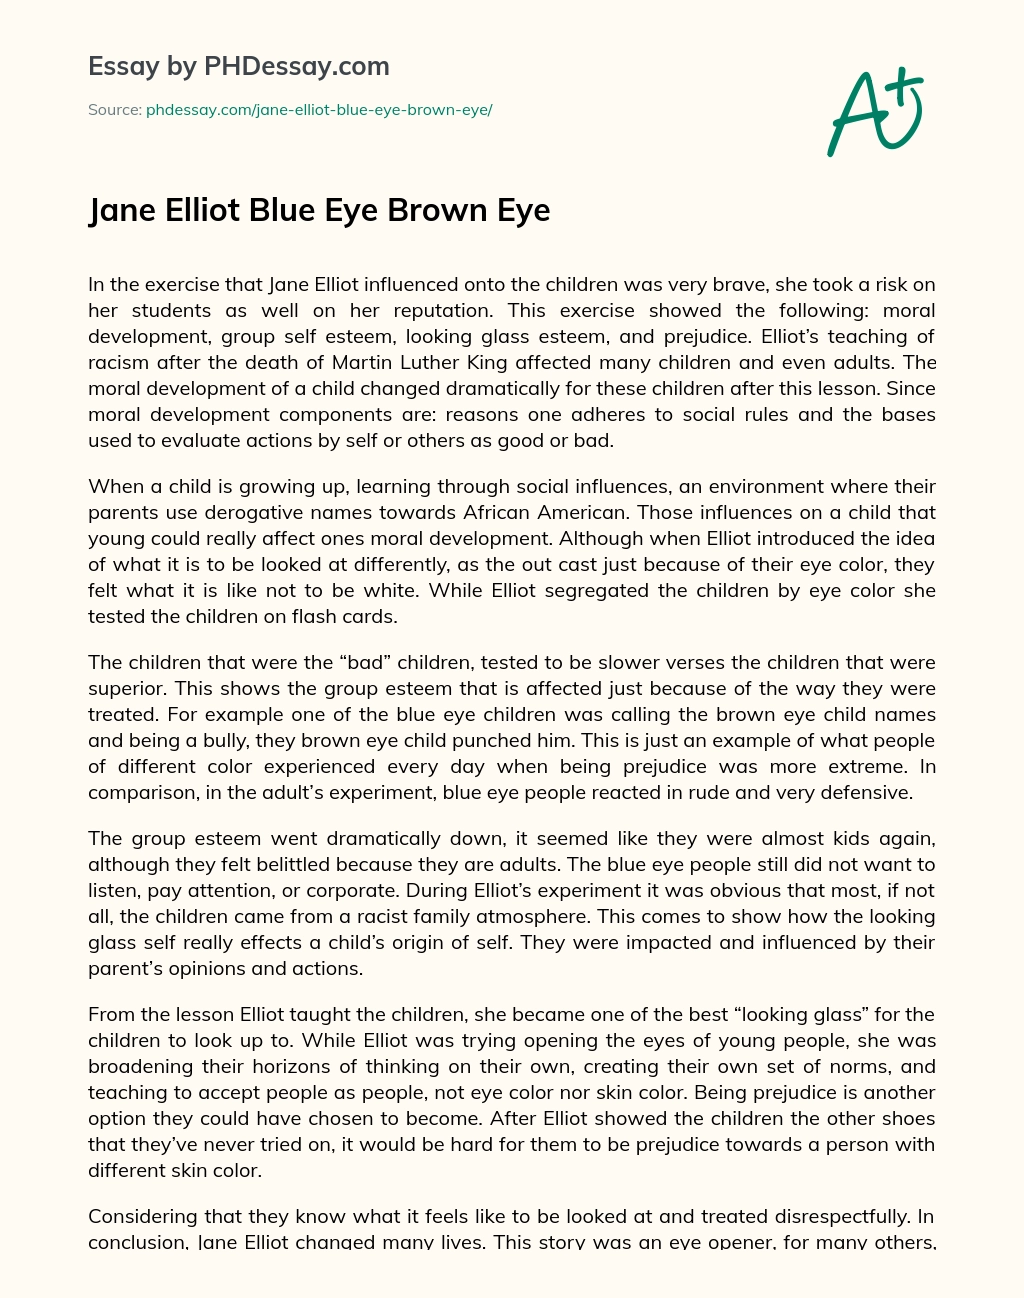 Jane Elliot Blue Eye Brown Eye essay